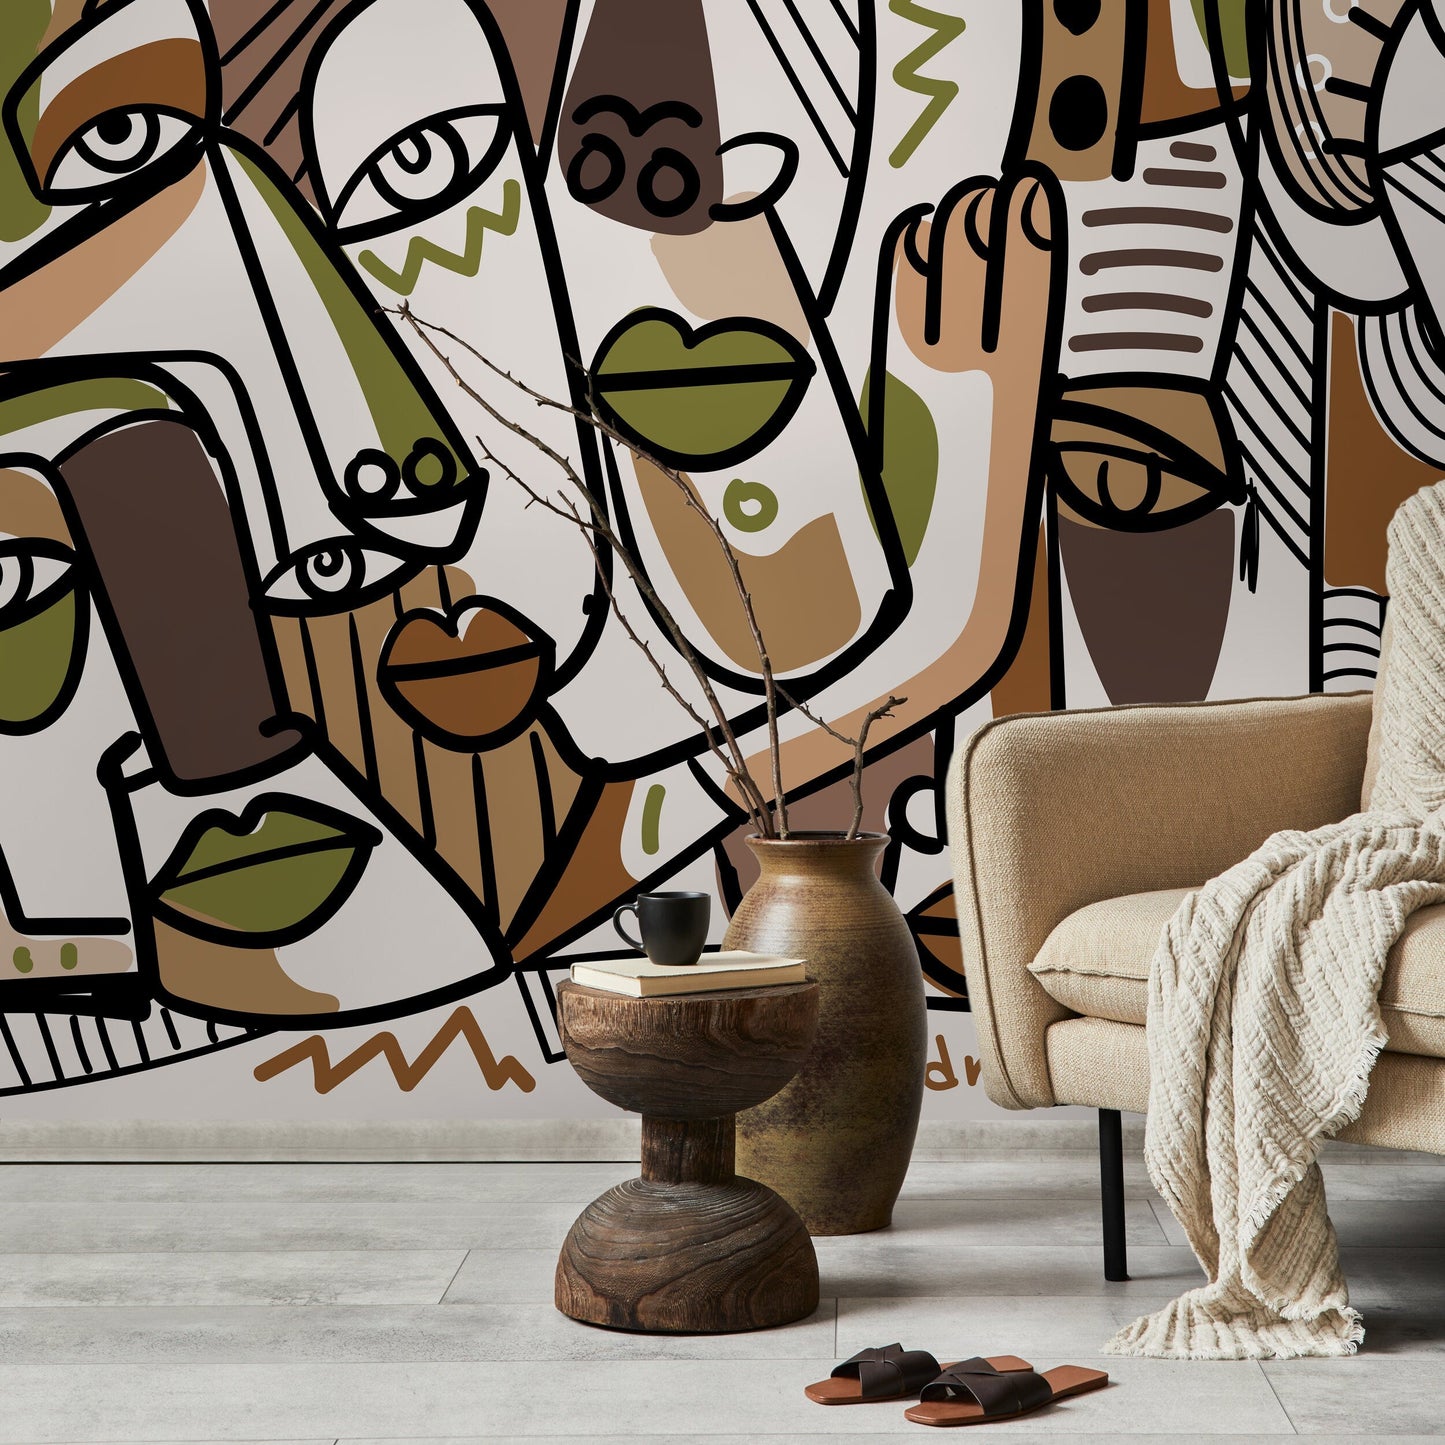 Abstract Mural Line Art Faces Wallpaper Modern Wallpaper Hand Drawing Wallpaper Peel and Stick Wallpaper Home Decor - D581